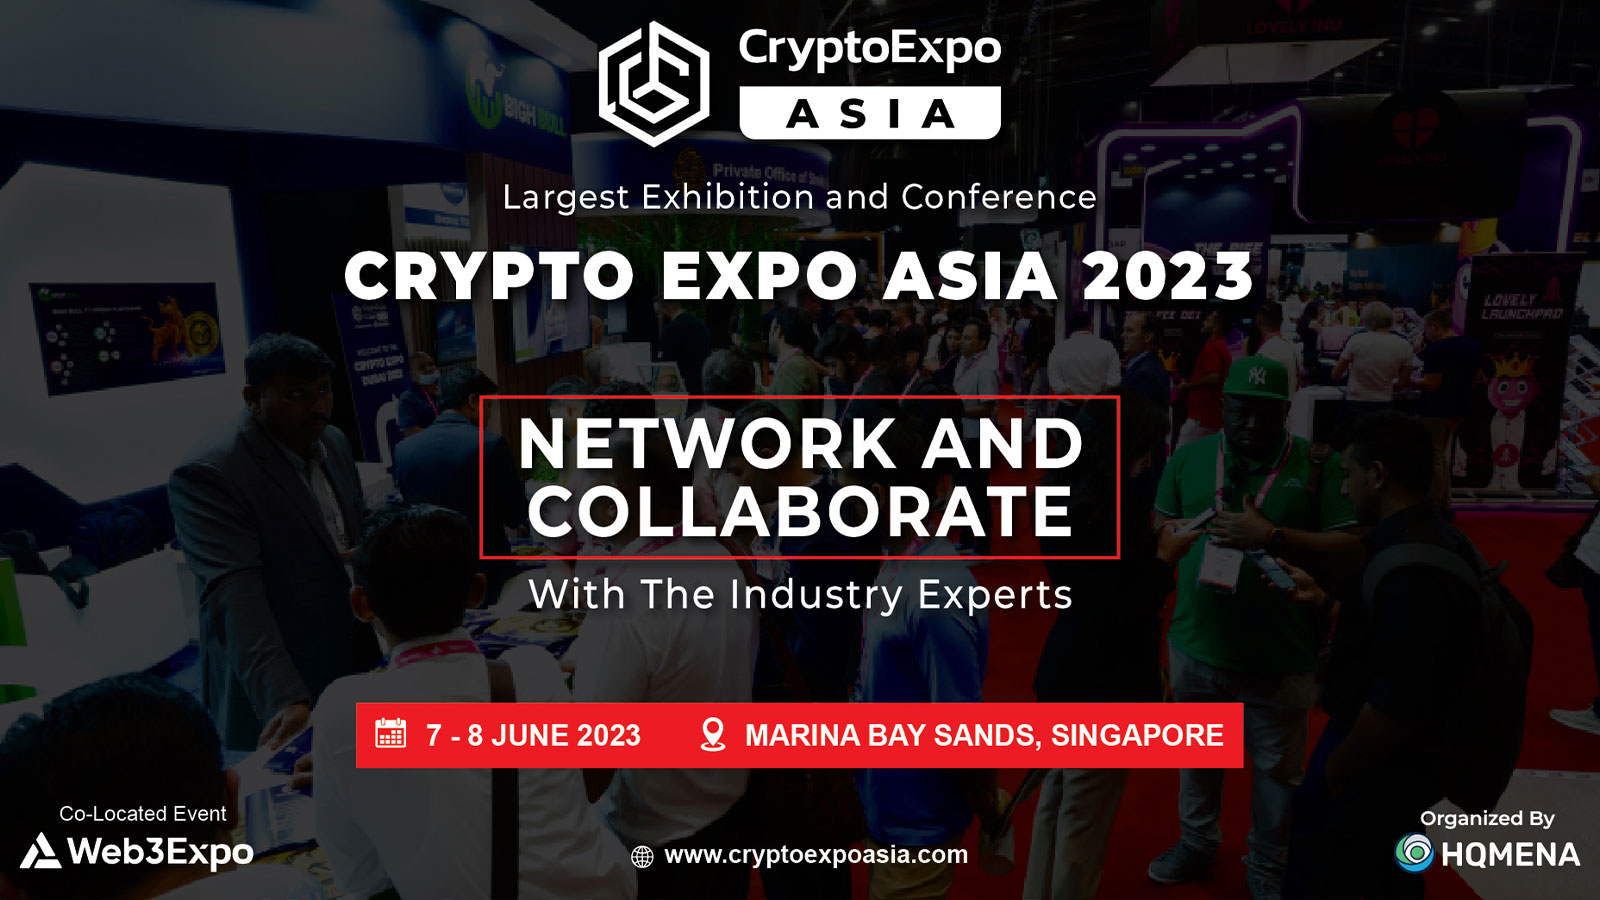 Crypto Expo Asia Announces Latest Headline Speakers and Partners: Coinhako, EMURGO, Matrixport, and More